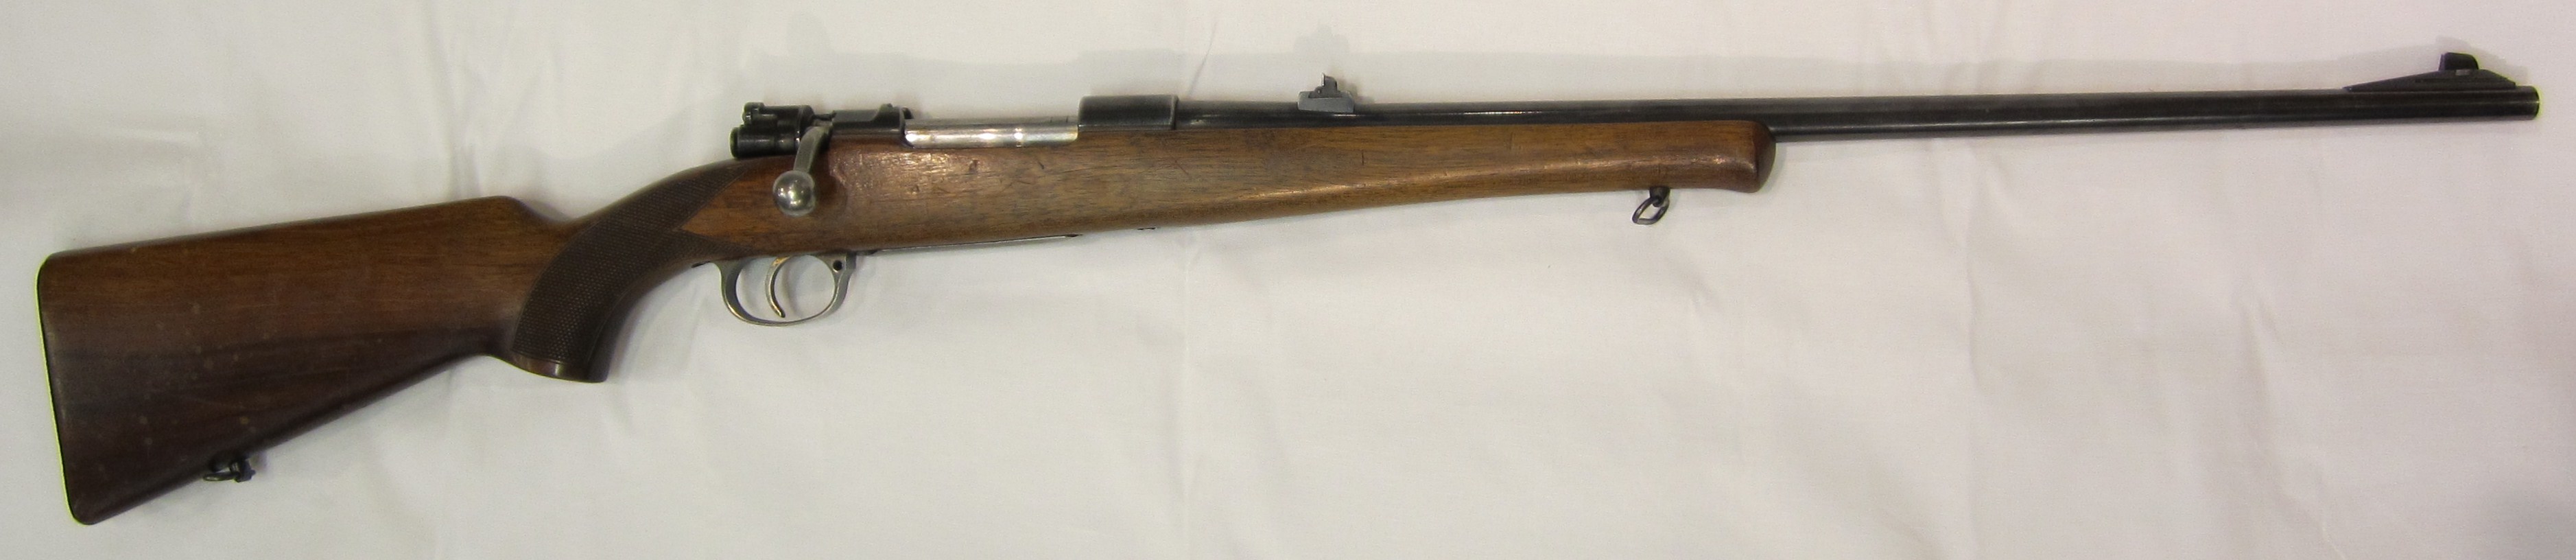 ./guns/rifle/bilder/Rifle-Kongsberg-Mauser-M52-1448-1.JPG